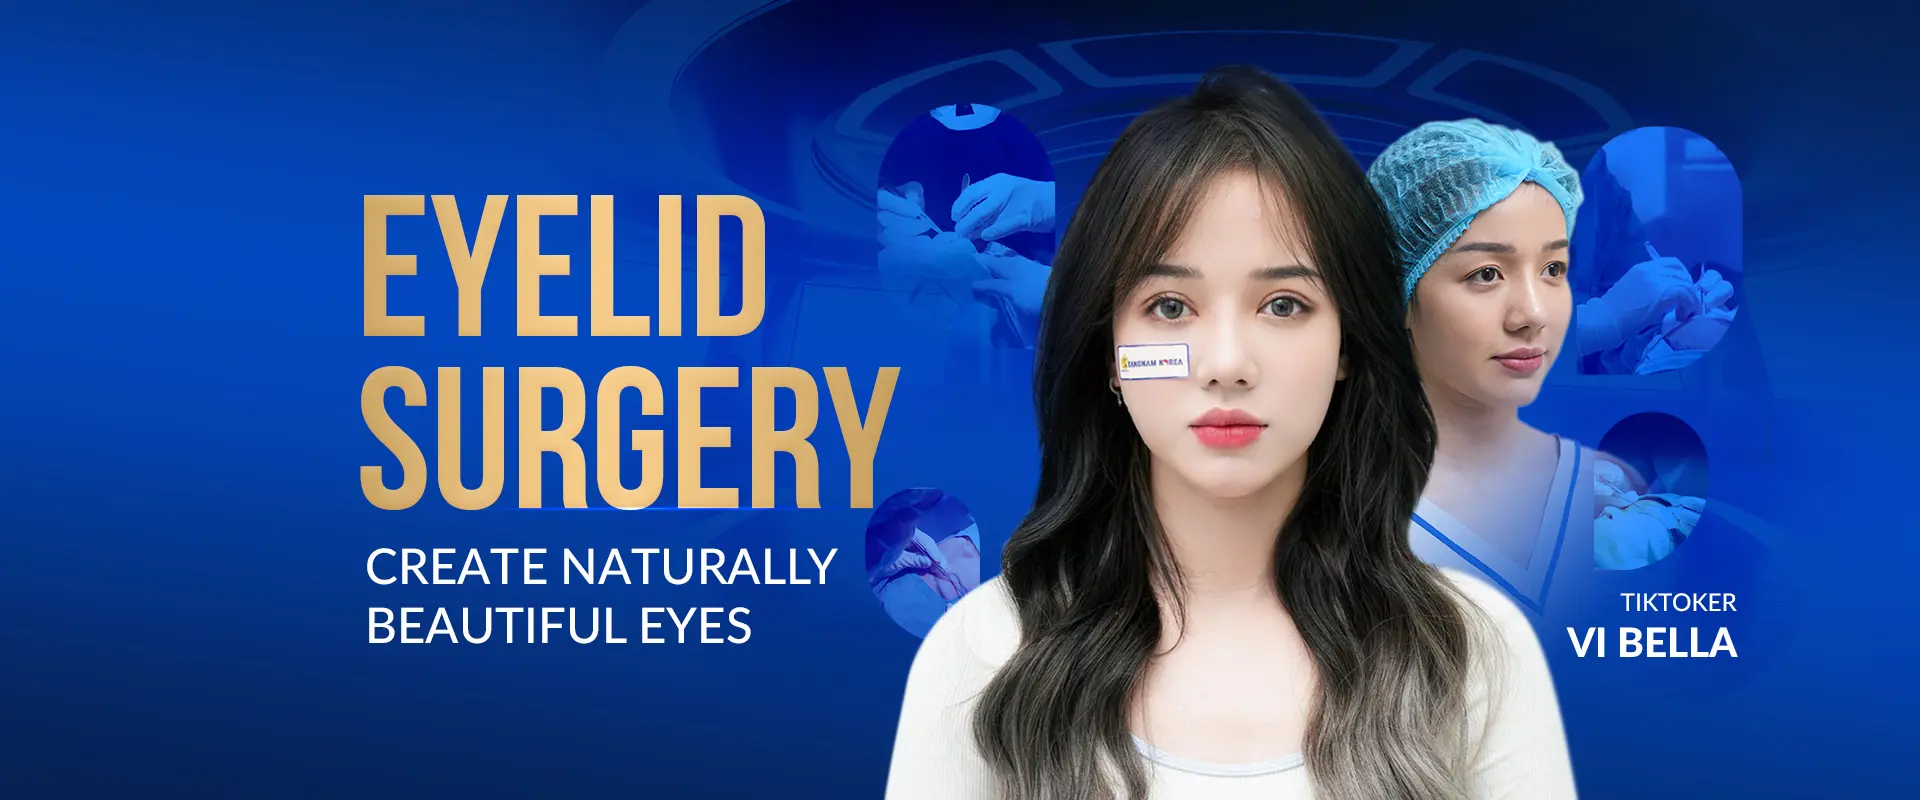 Perfect Eyes eyelid surgery creates naturally beautiful eyes